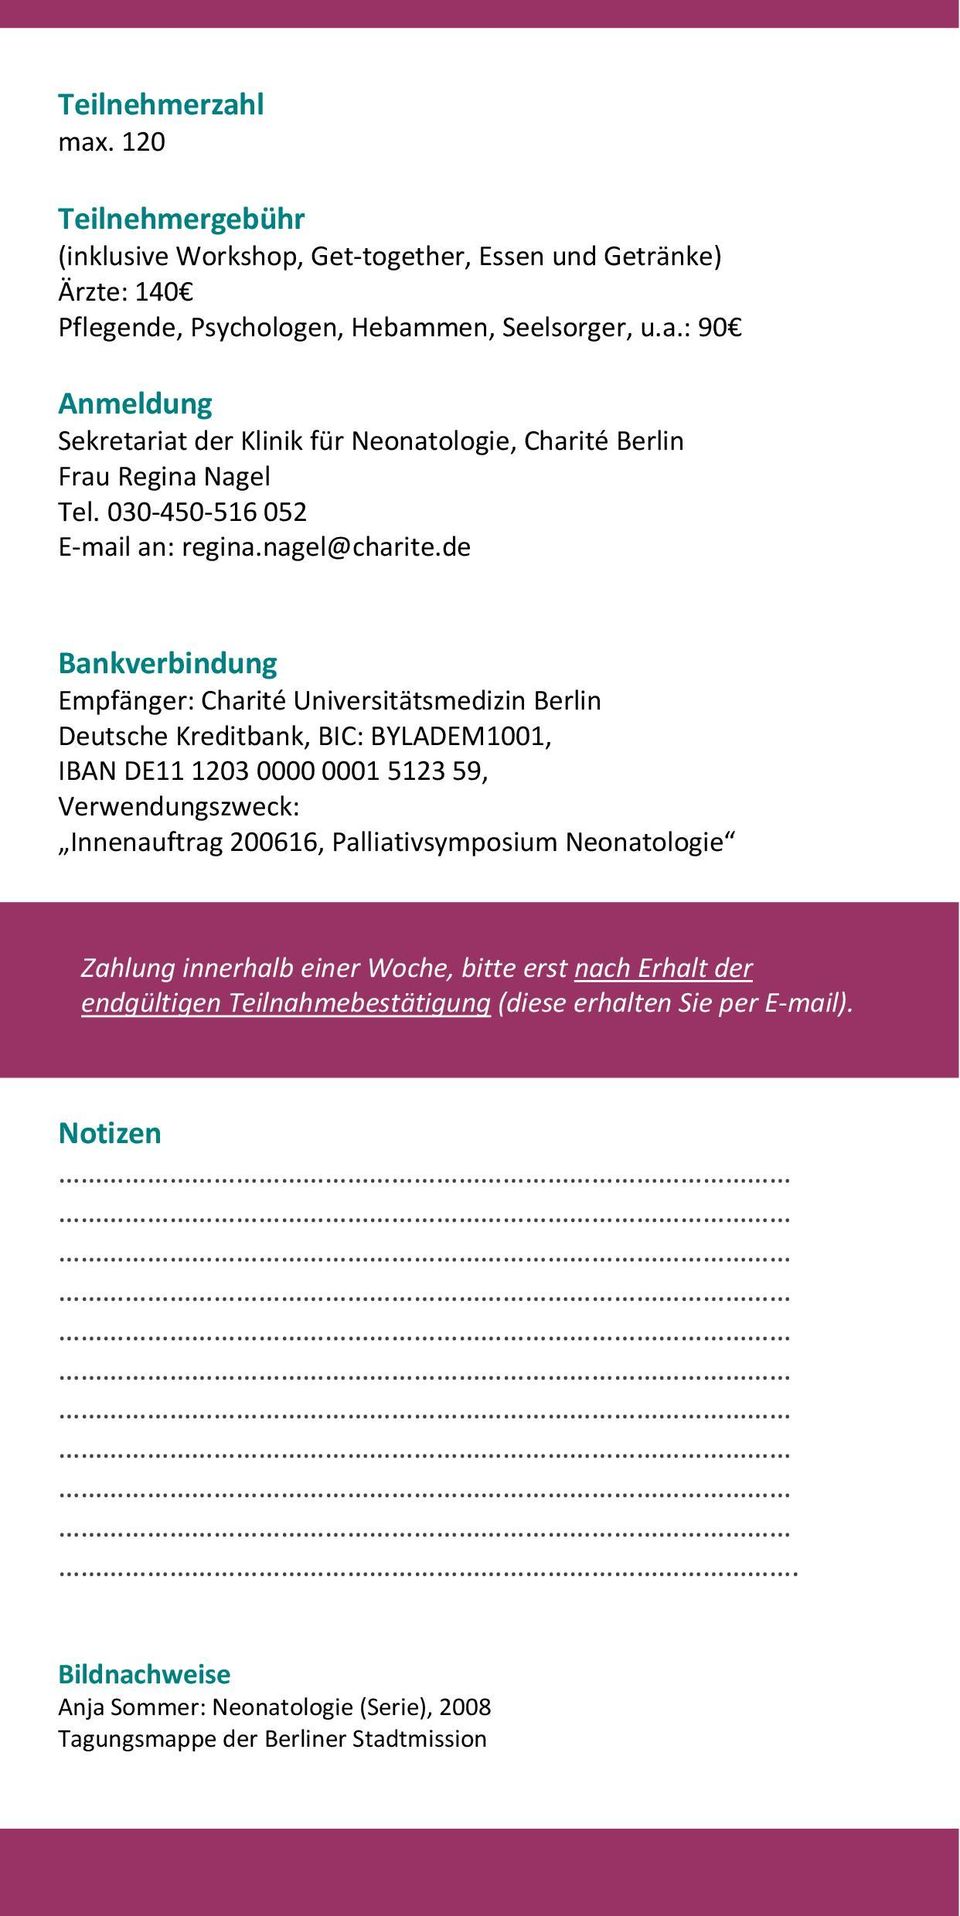 de Bankverbindung Empfänger: Charité Universitätsmedizin Berlin Deutsche Kreditbank, BIC: BYLADEM1001, IBAN DE11 1203 0000 0001 5123 59, Verwendungszweck: Innenauftrag 200616,